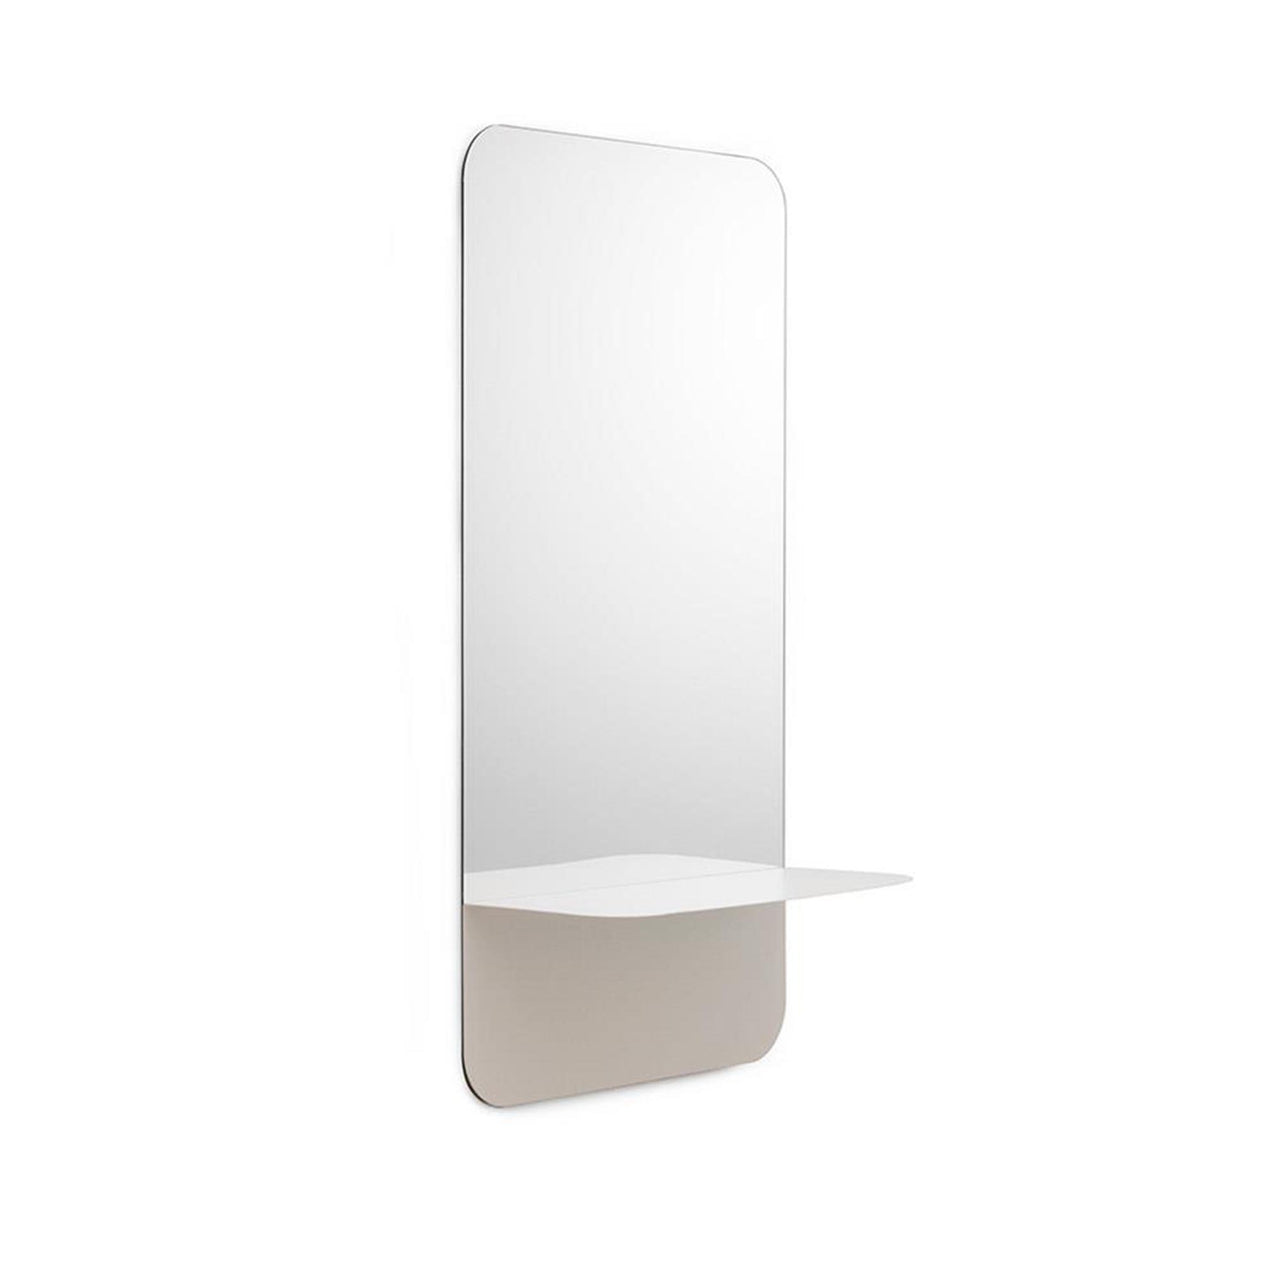 Horizon Mirror Vertical - White